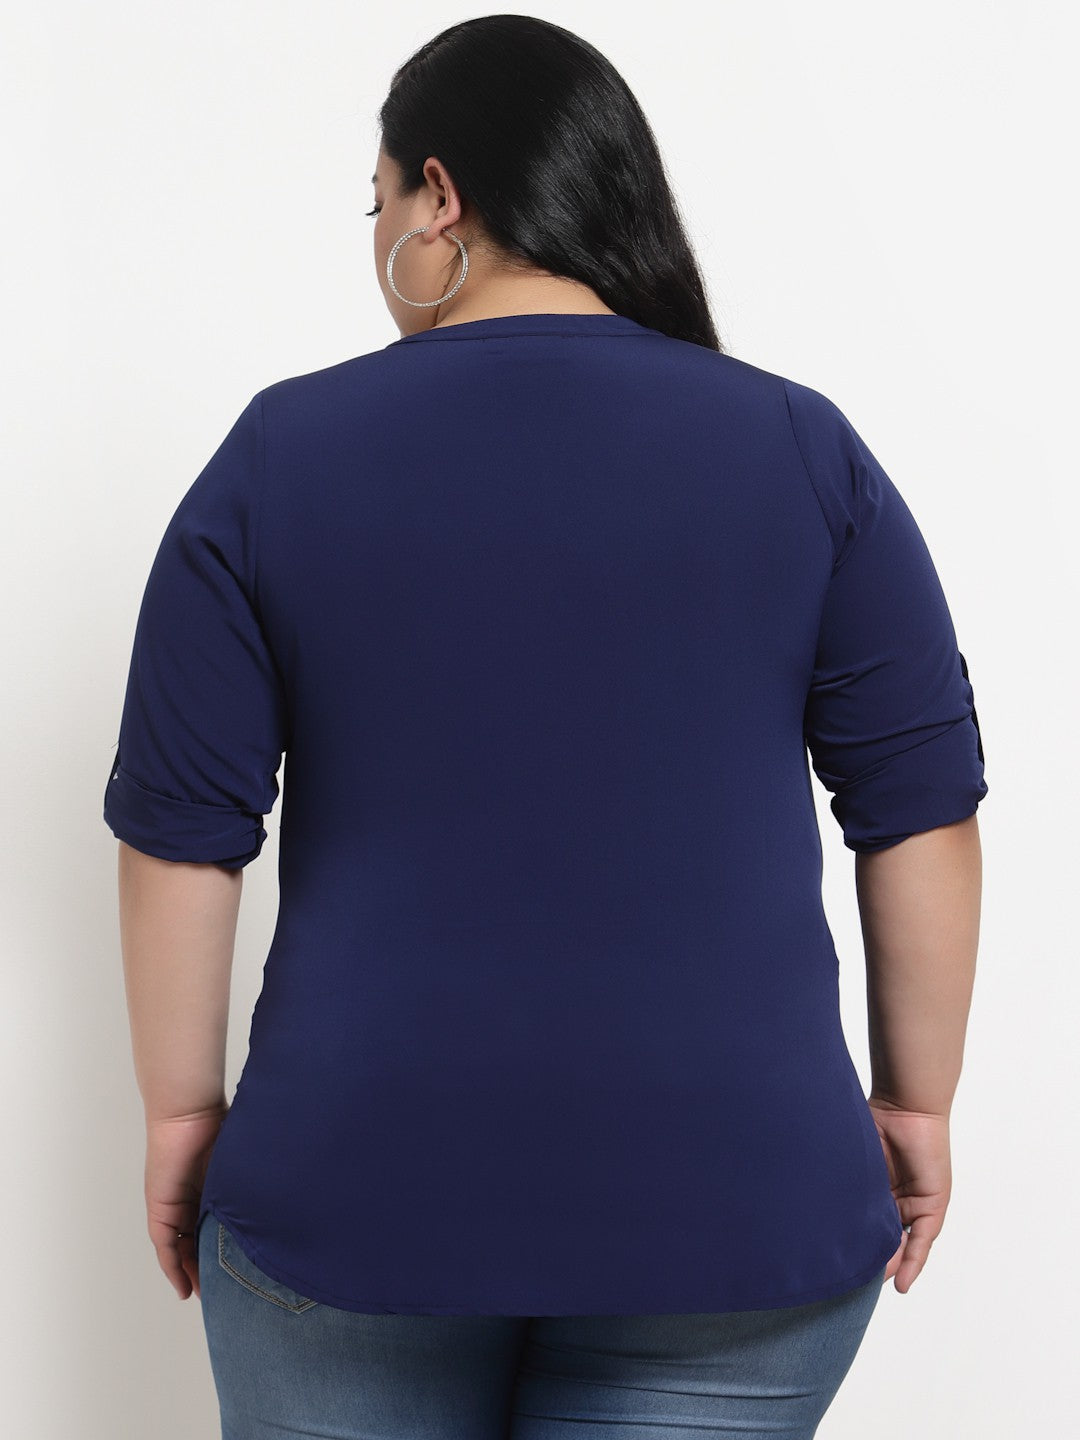 plusS Blue Mandarin Collar Roll-Up Sleeves Shirt Style Plus Size Top 8XL / Navy Blue / Polyester